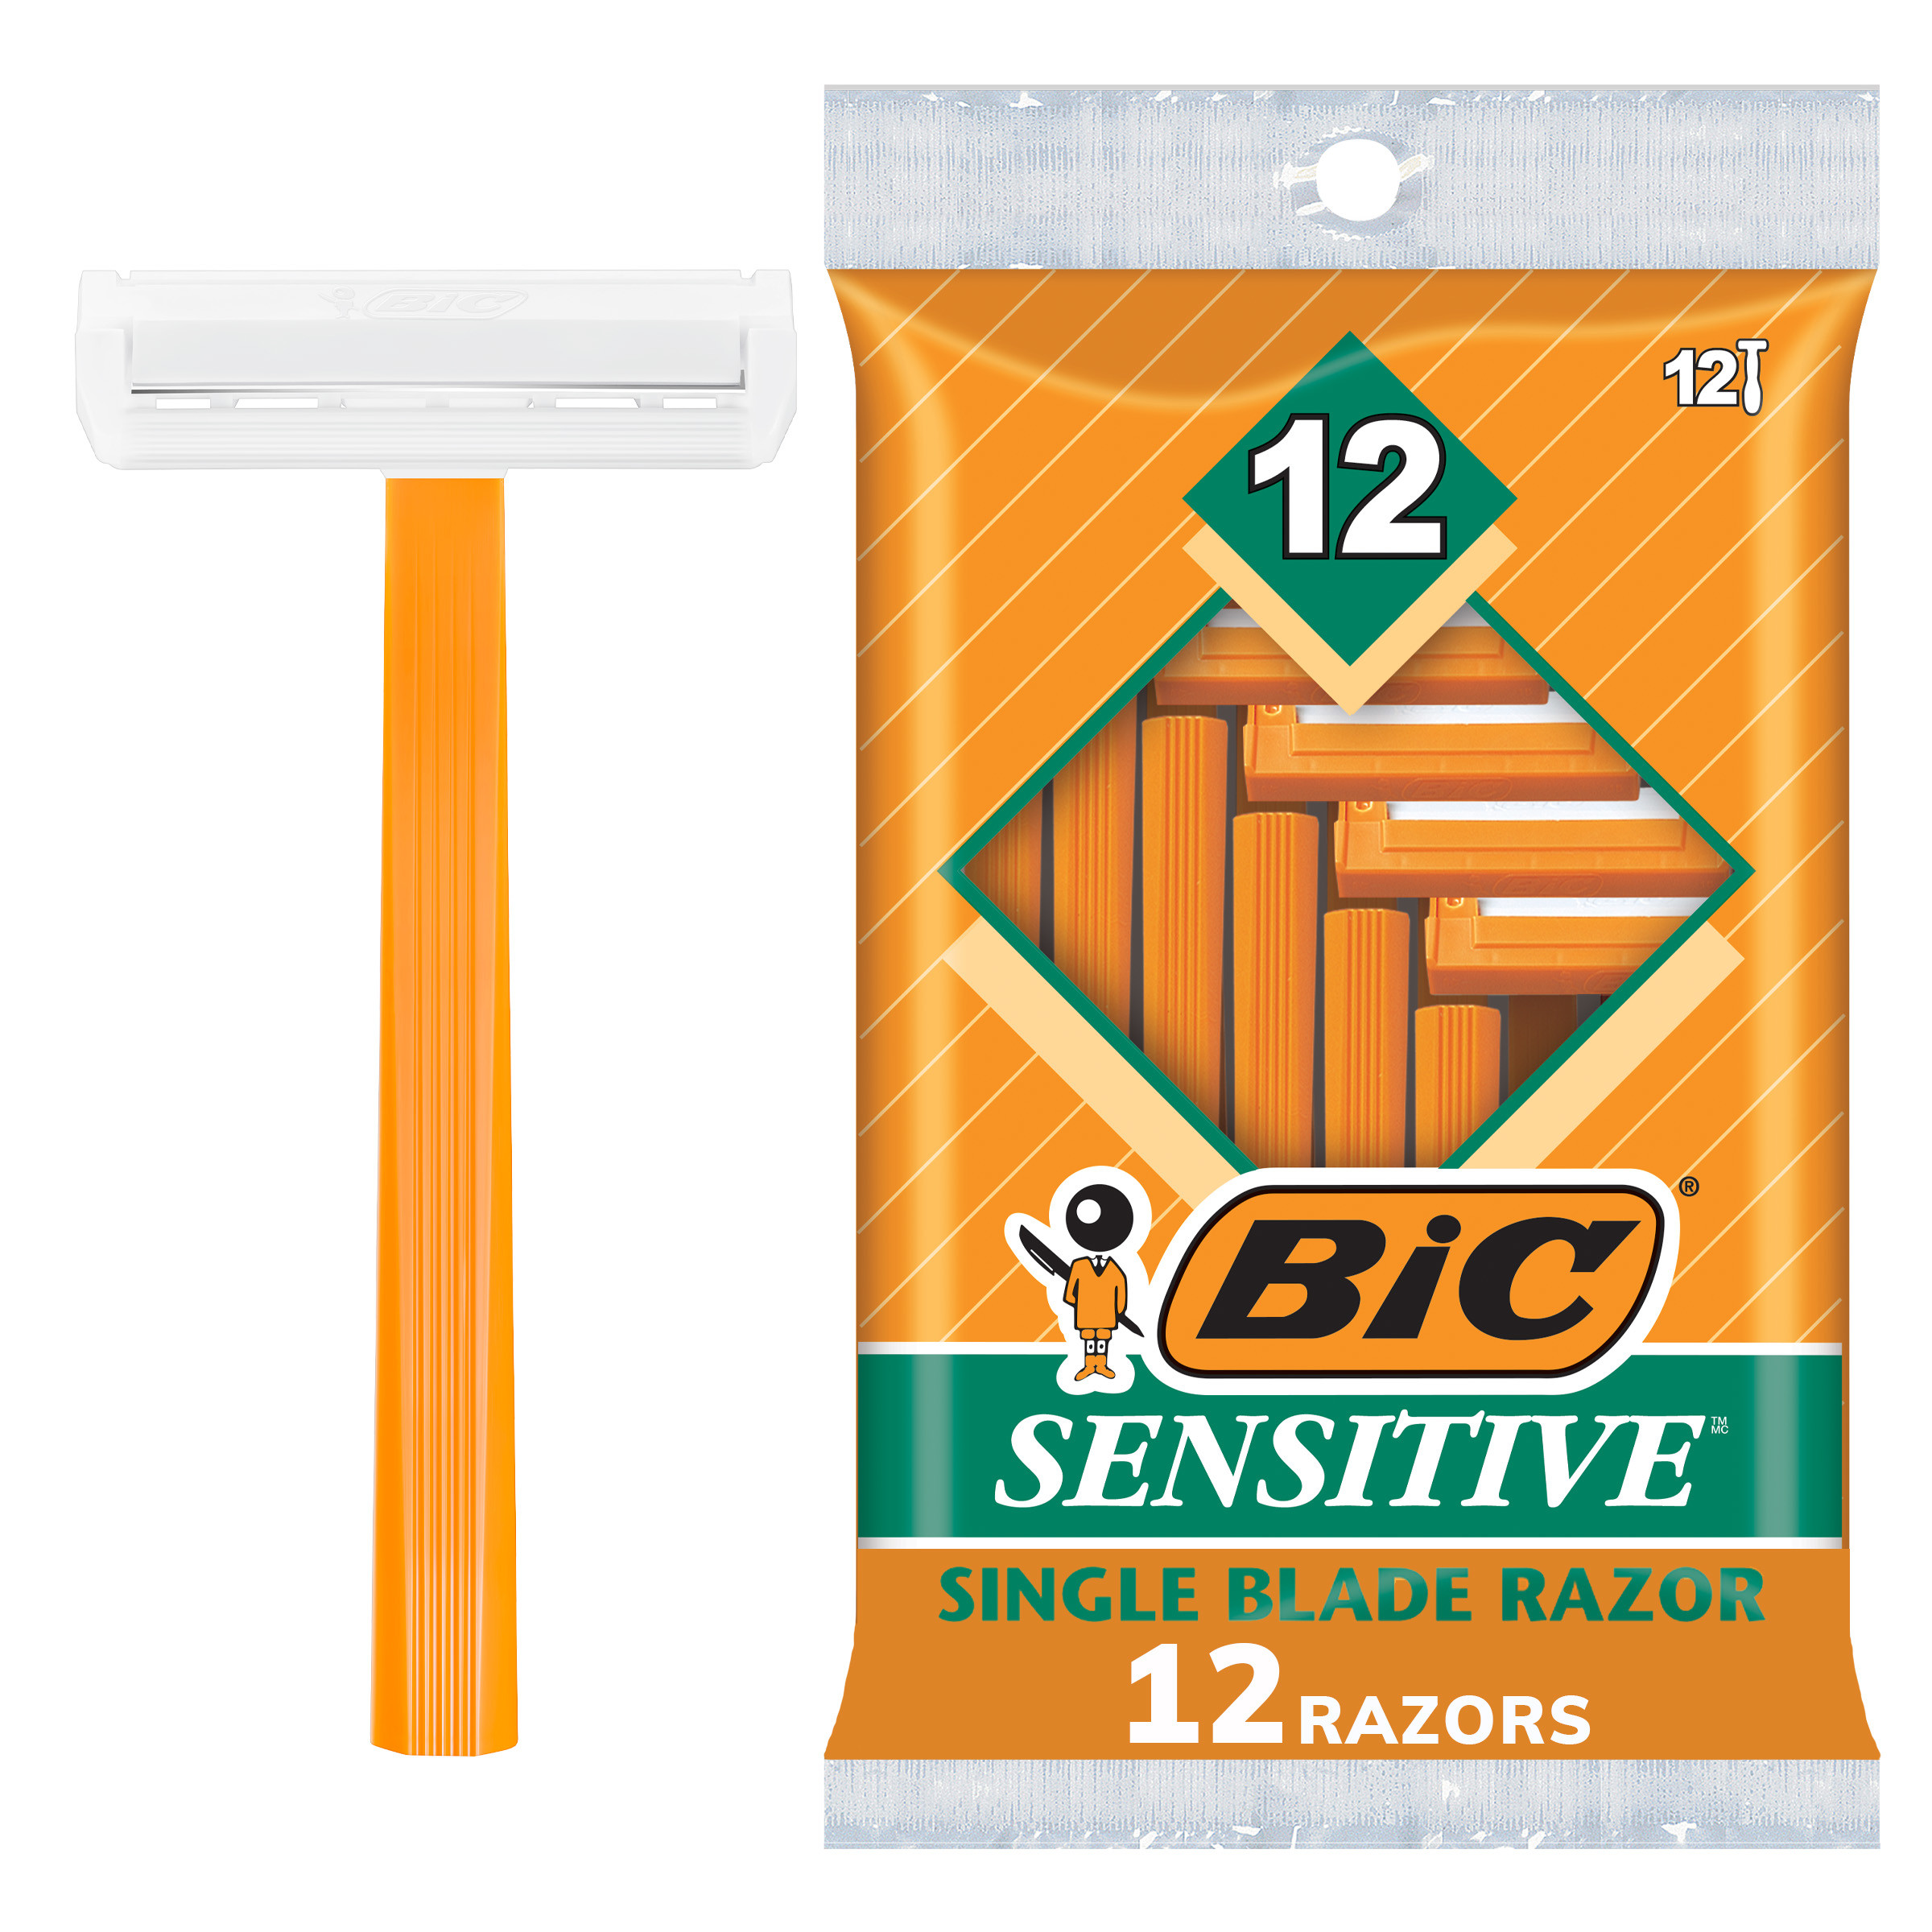 BIC Sensitive Shaver Men's Disposable Razor, Single Blade, Comfortable Smooth Shave, 12-Count - image 1 of 7